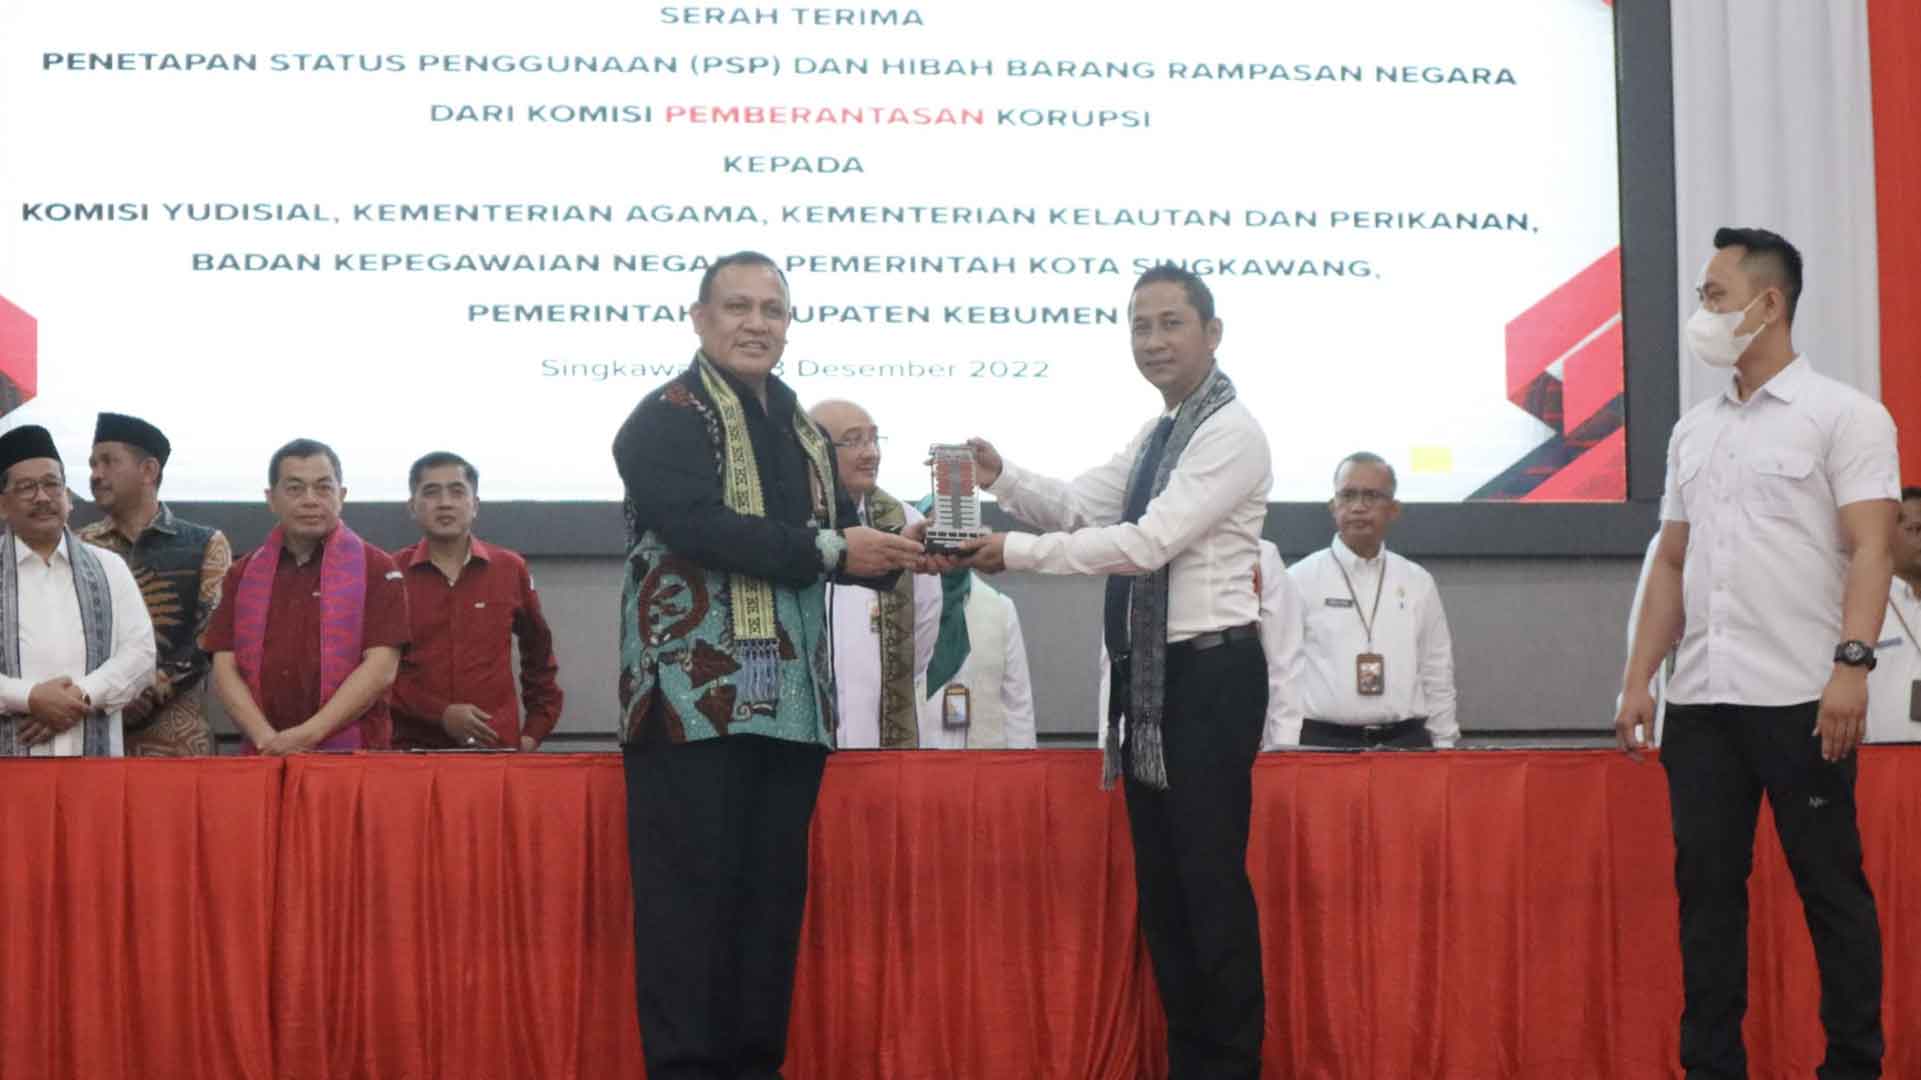 KY Terima Hibah Tanah dan Bangunan Barang Rampasan Negara di Surabaya dari KPK